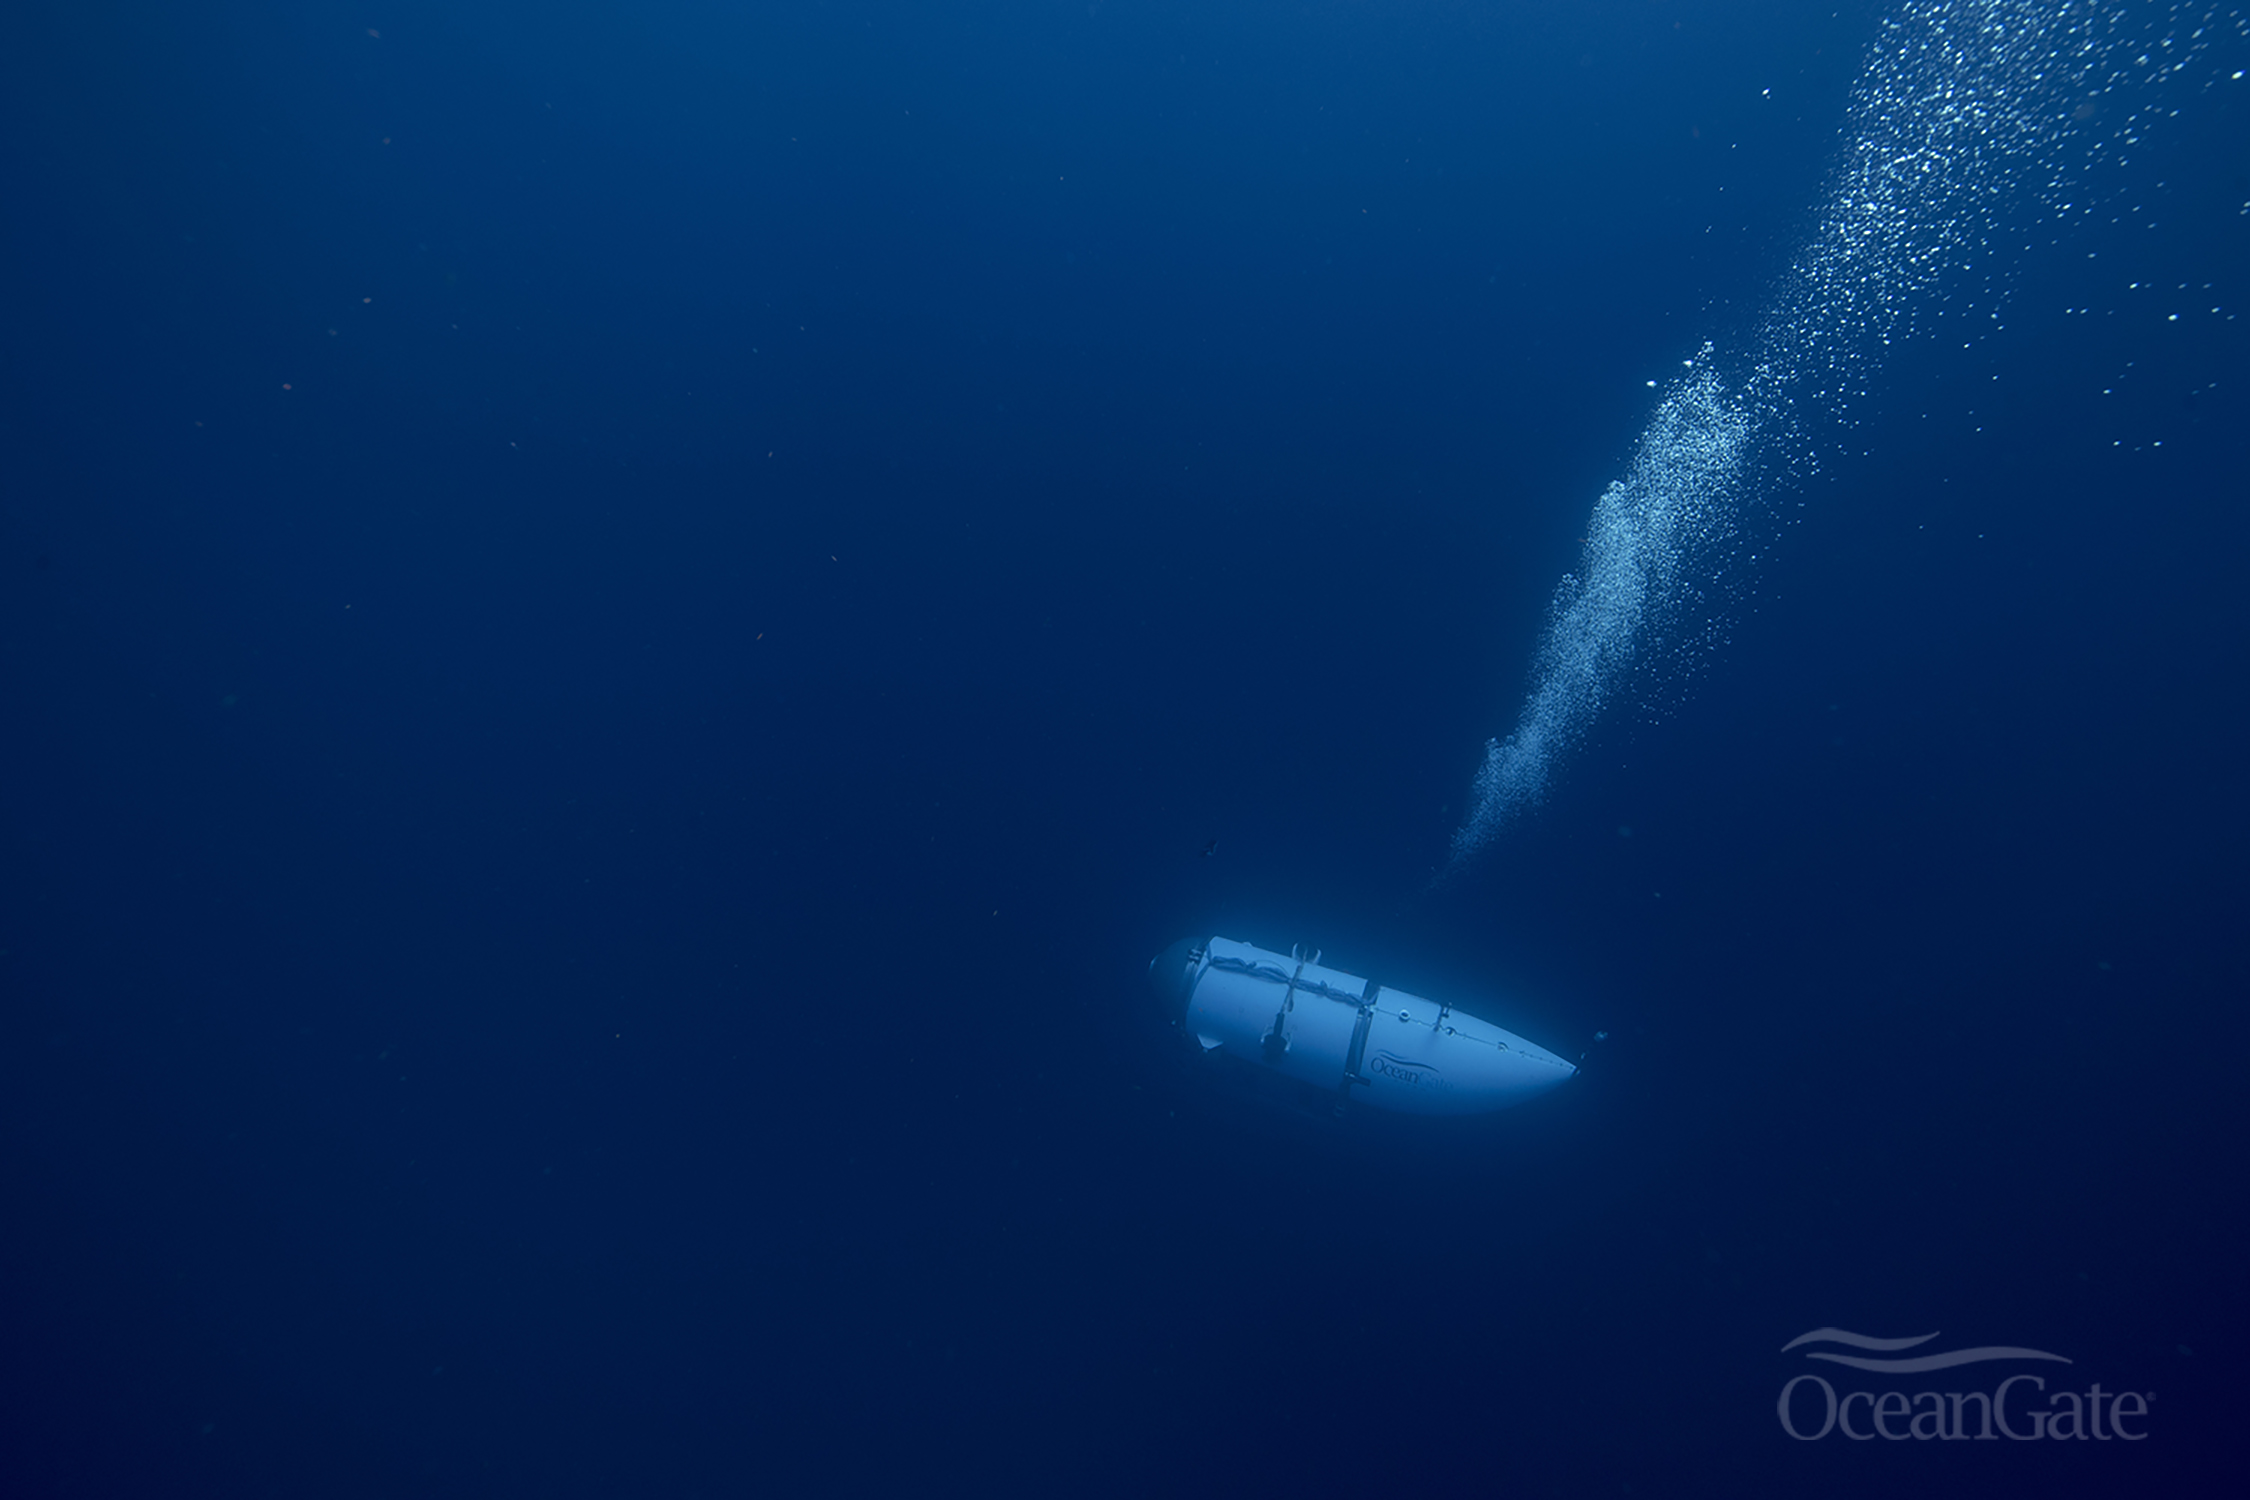 OceanGate's 5 Person Submersible, Titan